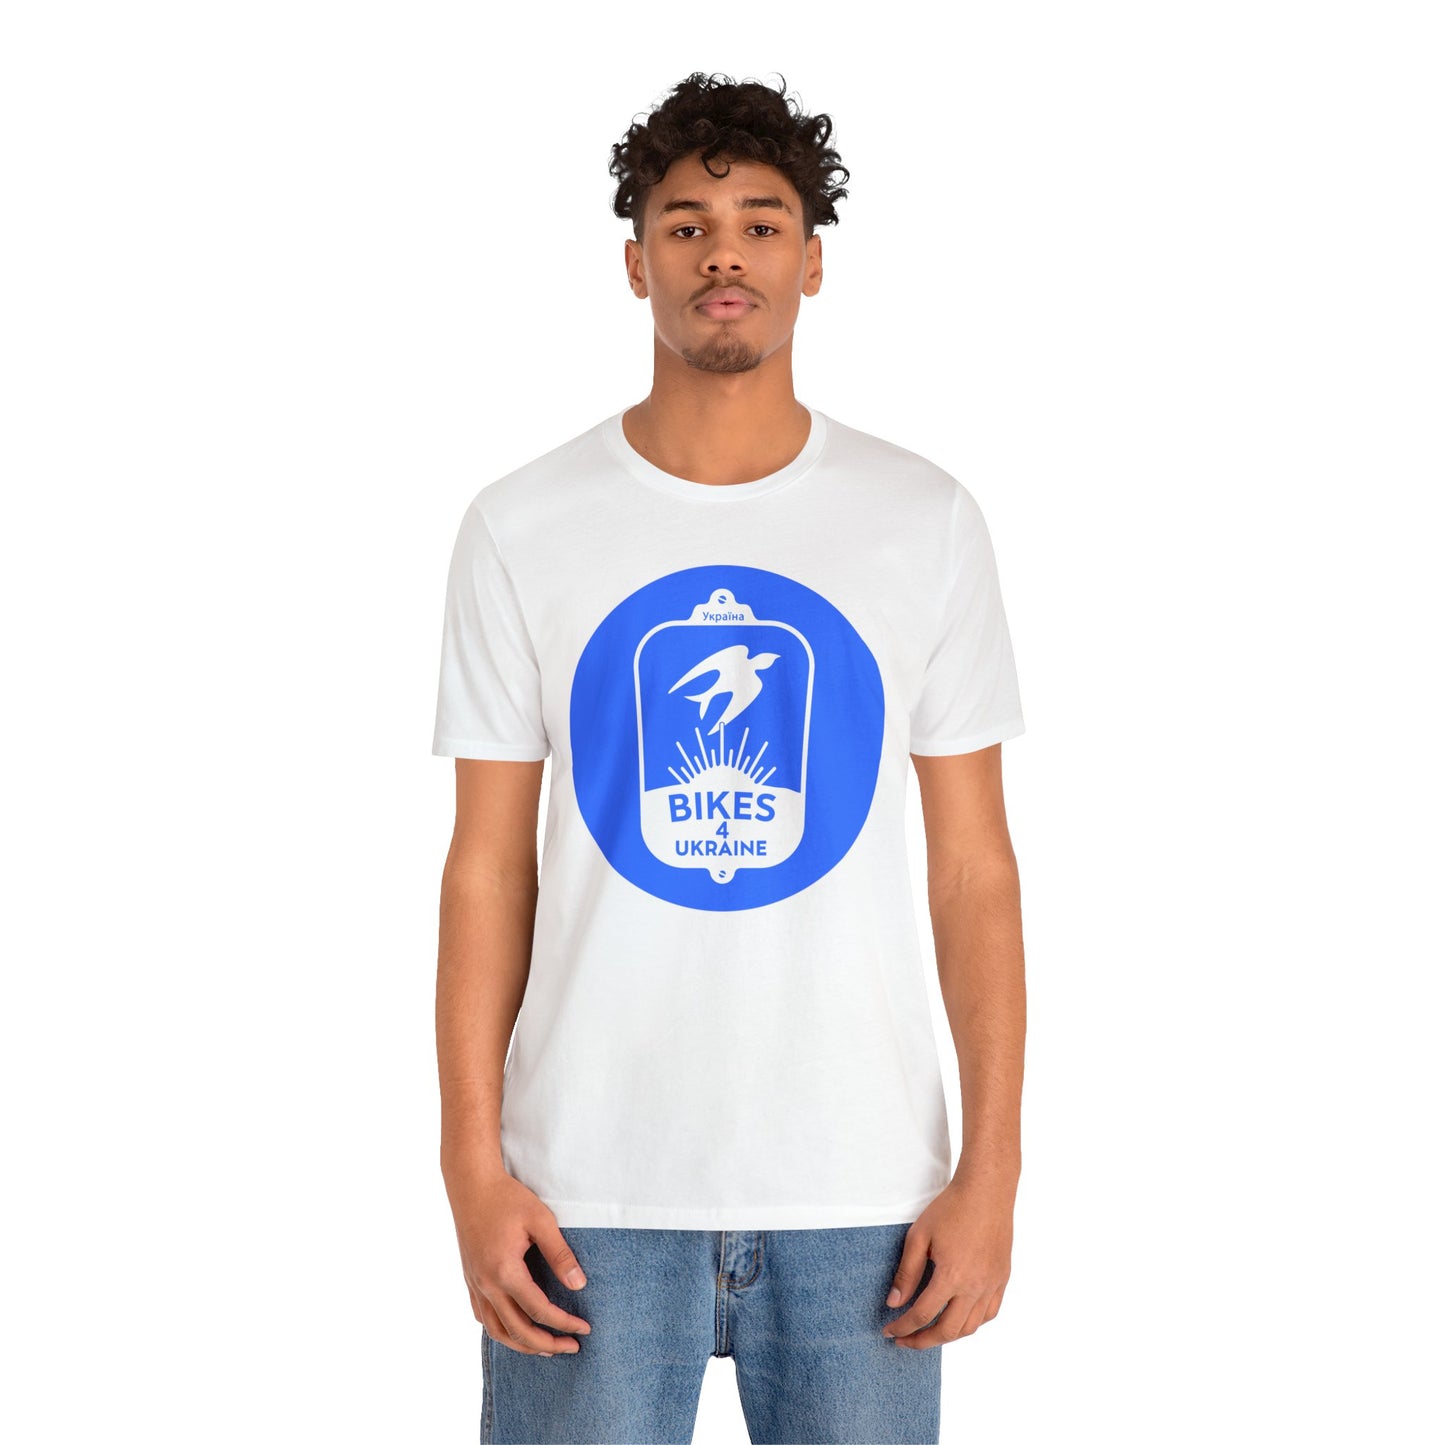 Bikes4Ukraine Logo T-shirt - Blue - Unisex Jersey Short Sleeve Tee